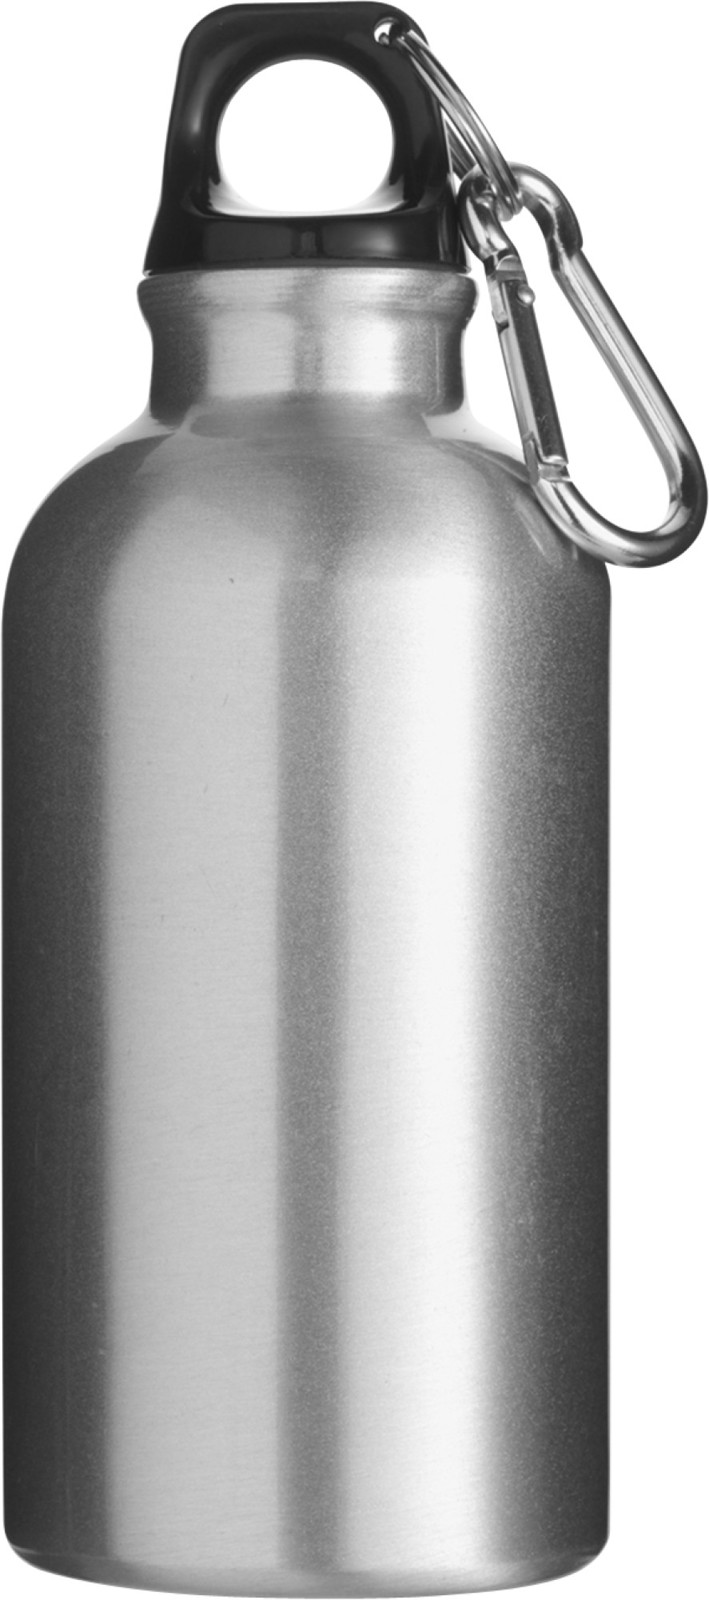 Aluminium bottle - Silver